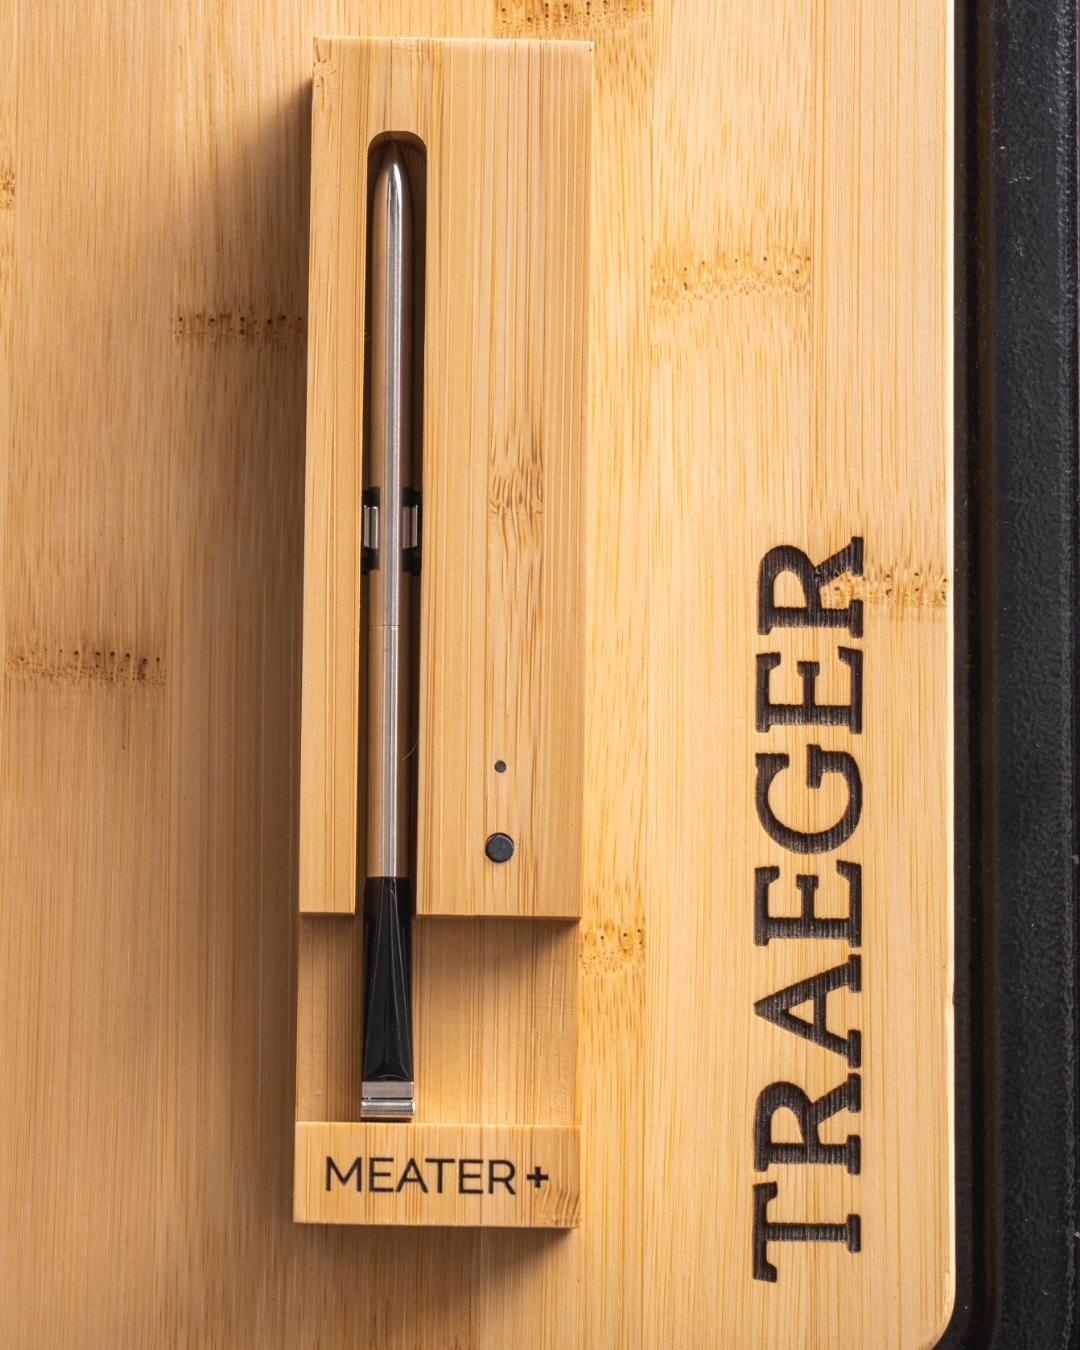 Wireless Thermometer MEATER Plus : r/Smokingmeat